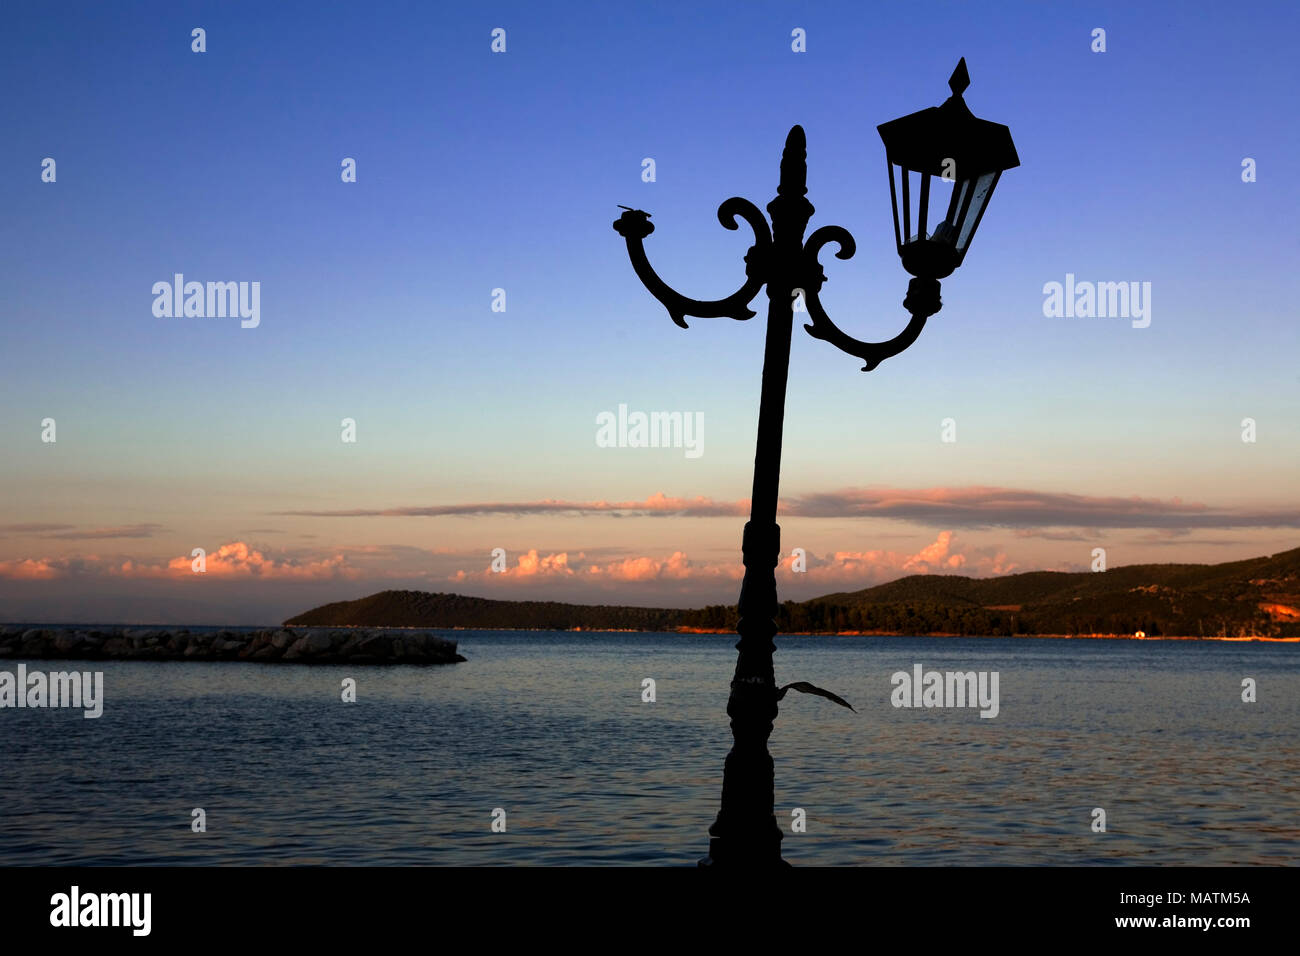 A battered and drunken lamppost, Vonitsa, Amvrakkios Gulf, Greece Stock Photo